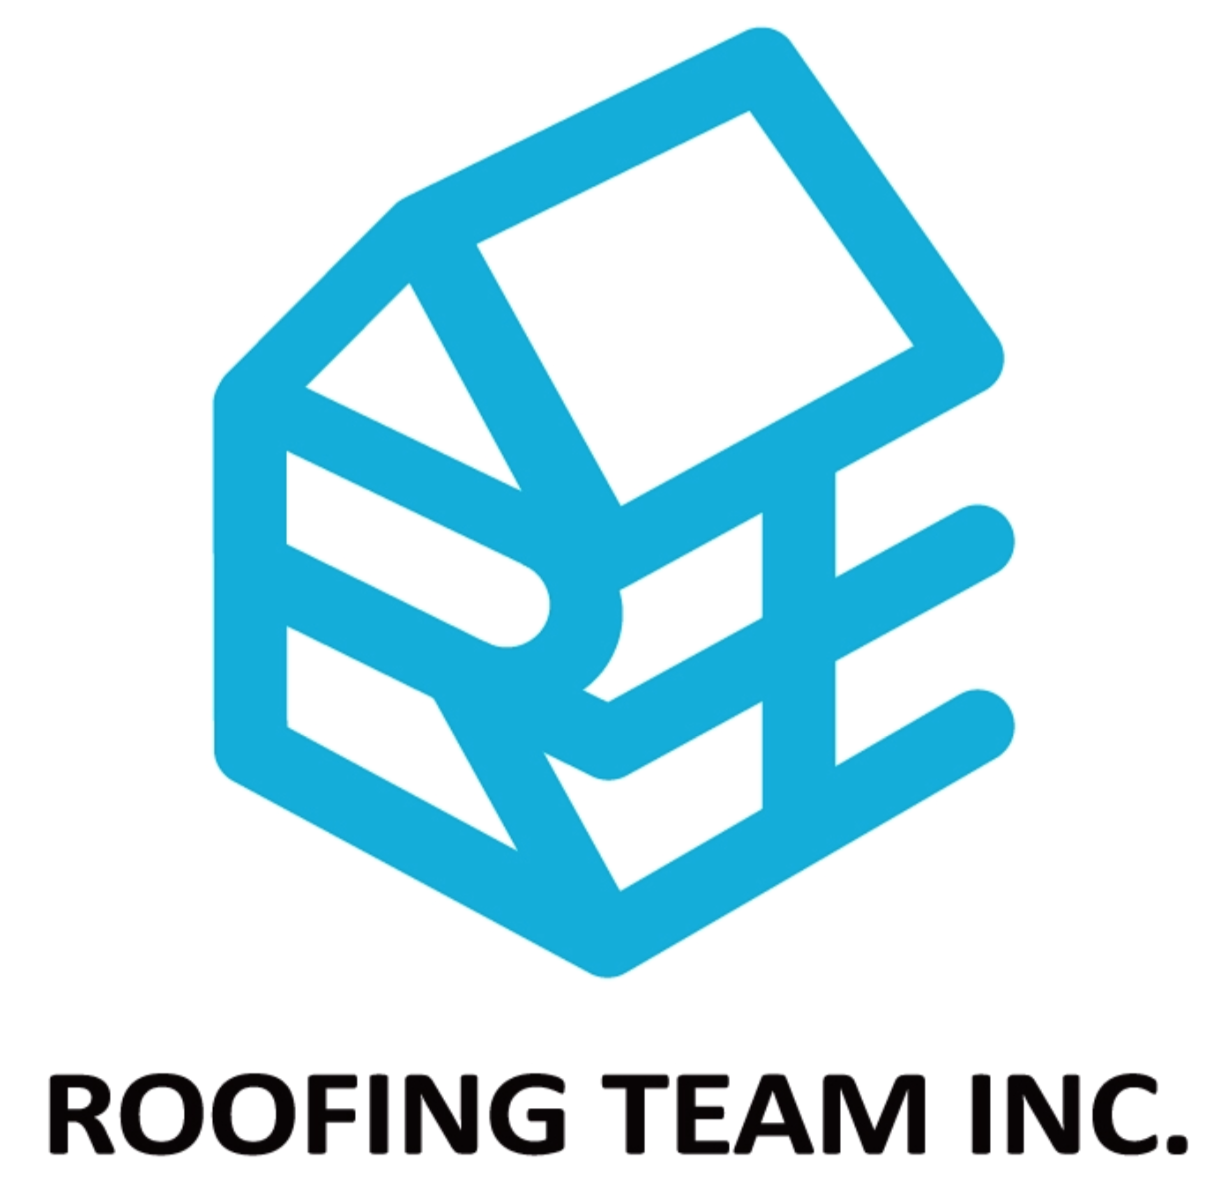 Roofing Team Inc.'s logo